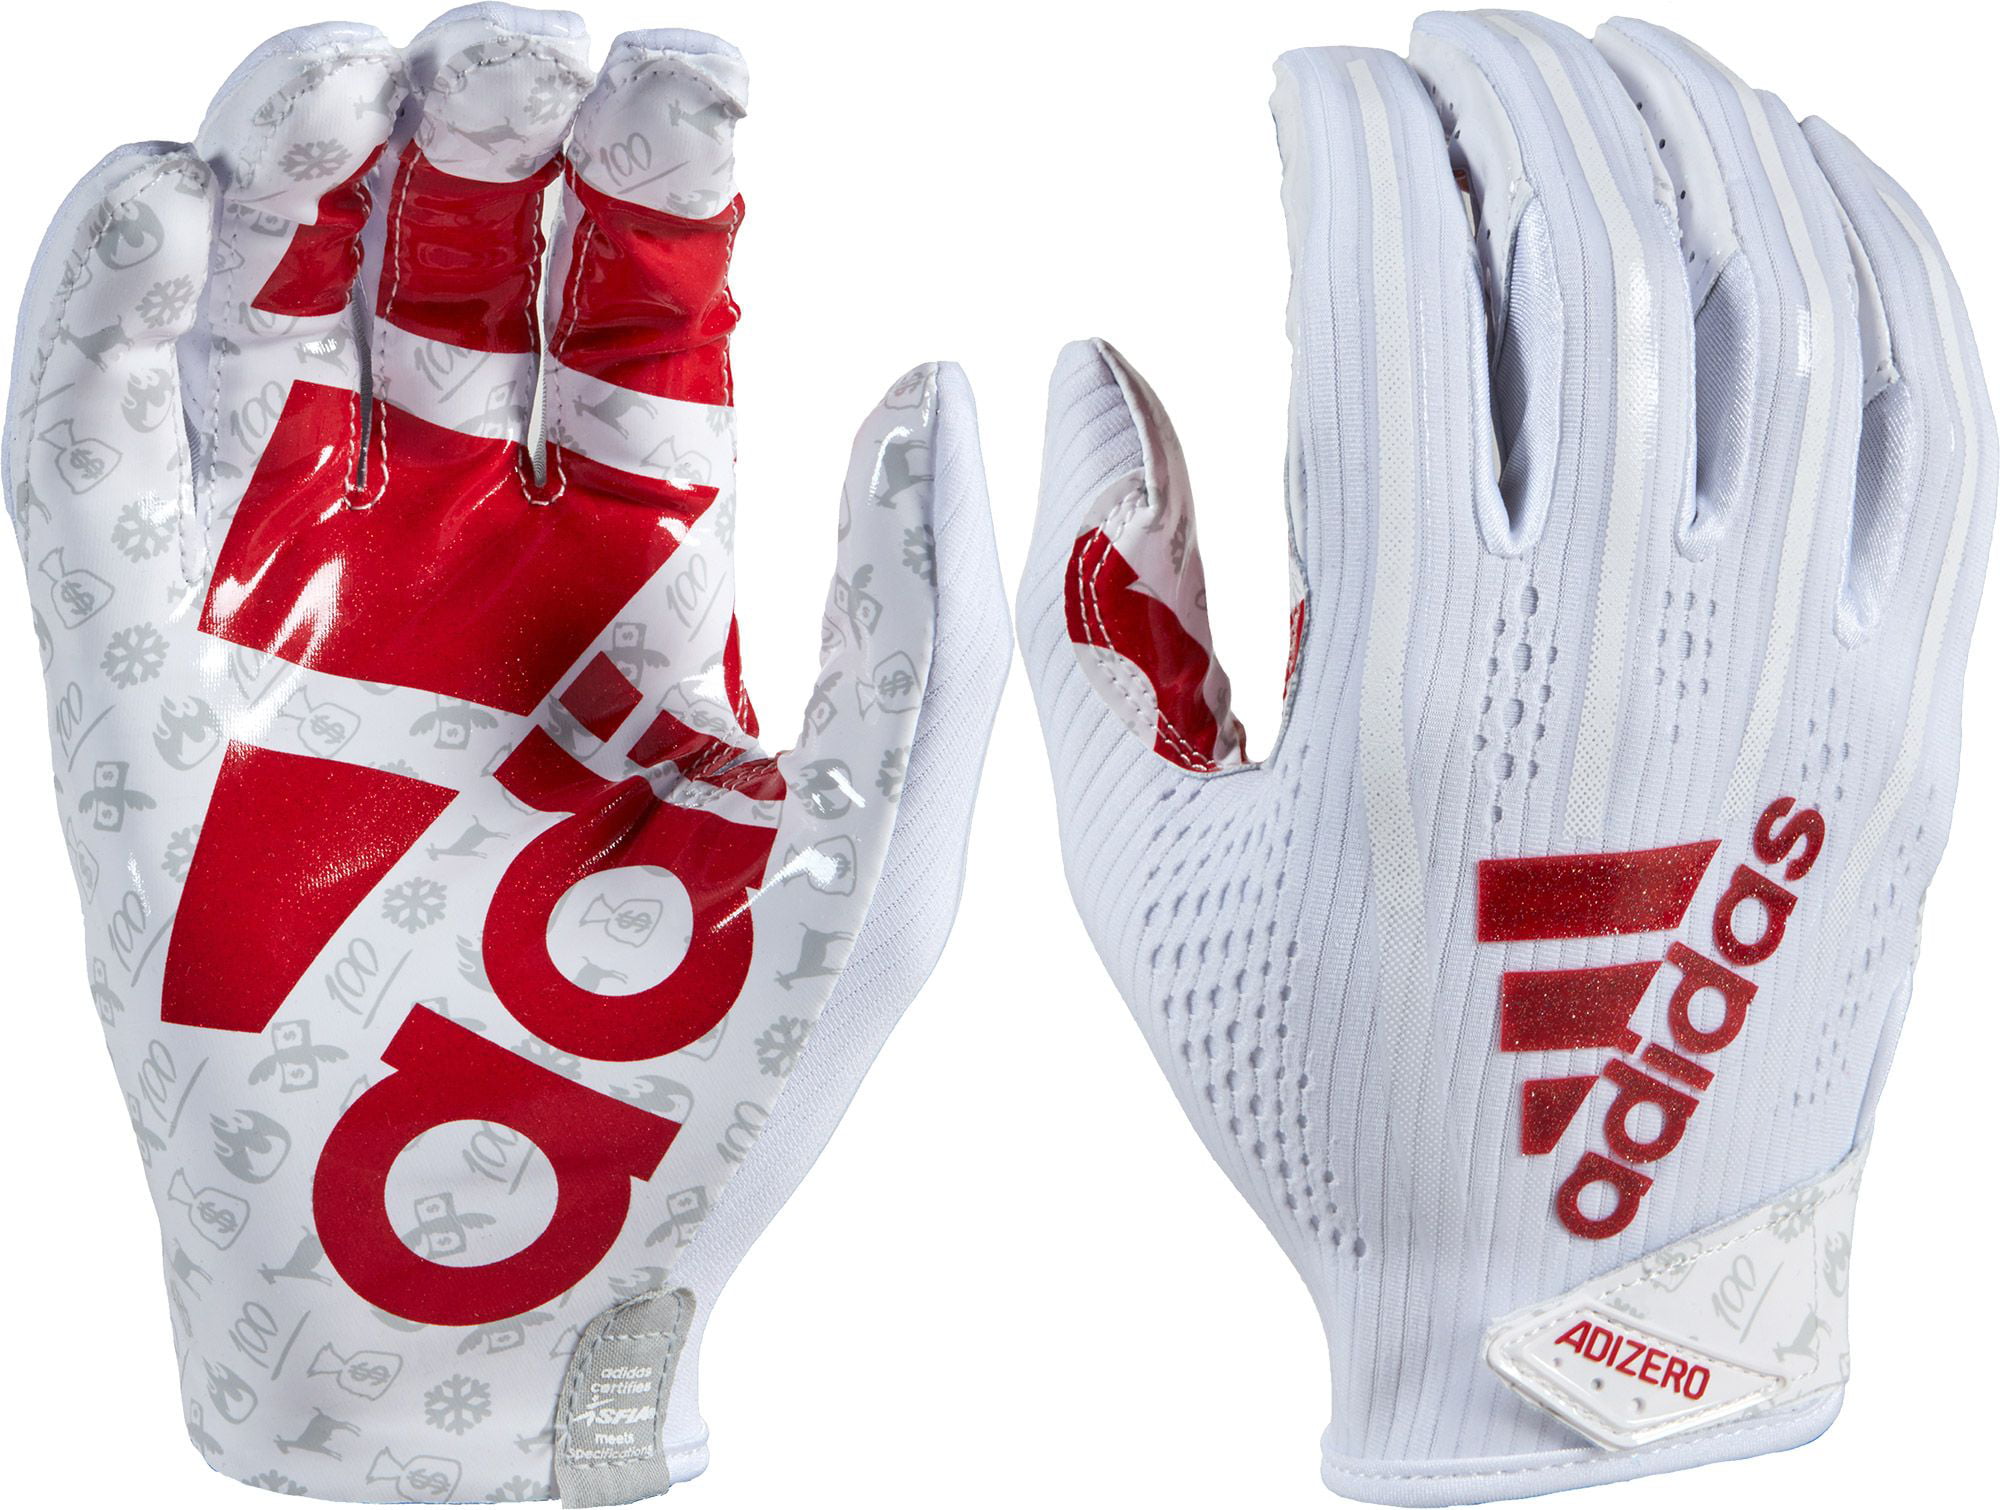 adidas red football gloves